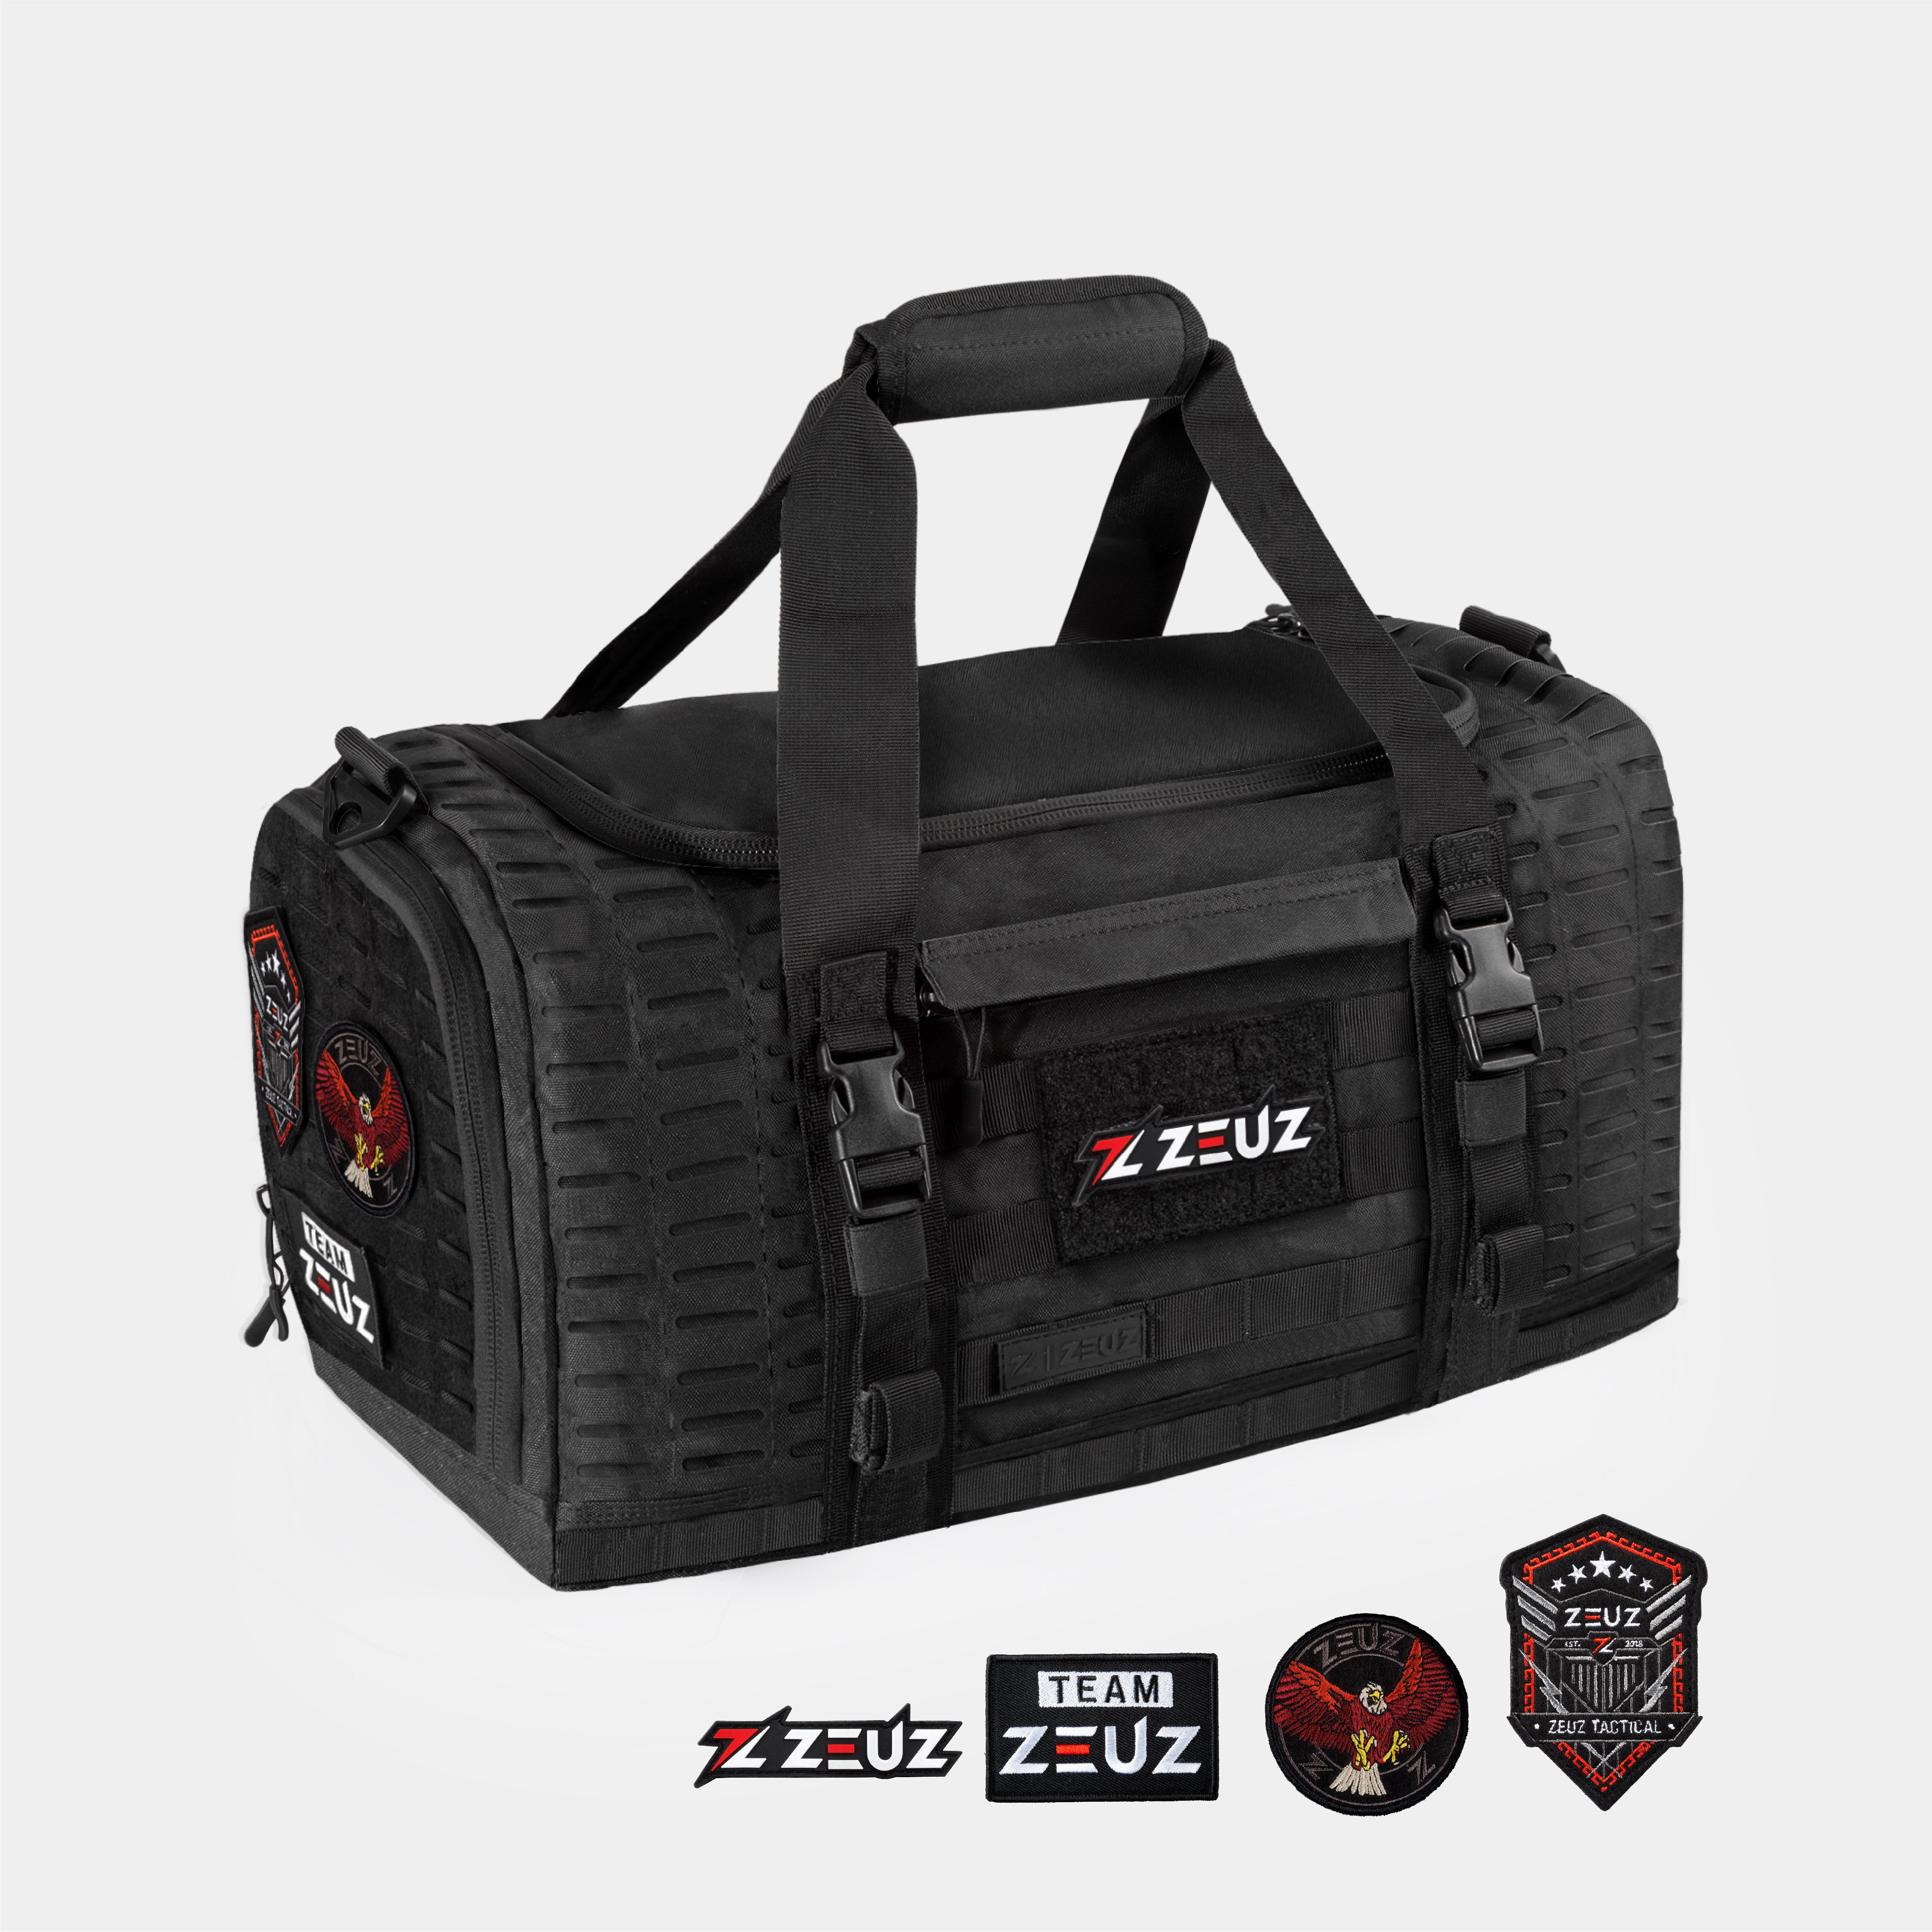 ZEUZ Sporttas - Fitness Duffel bag